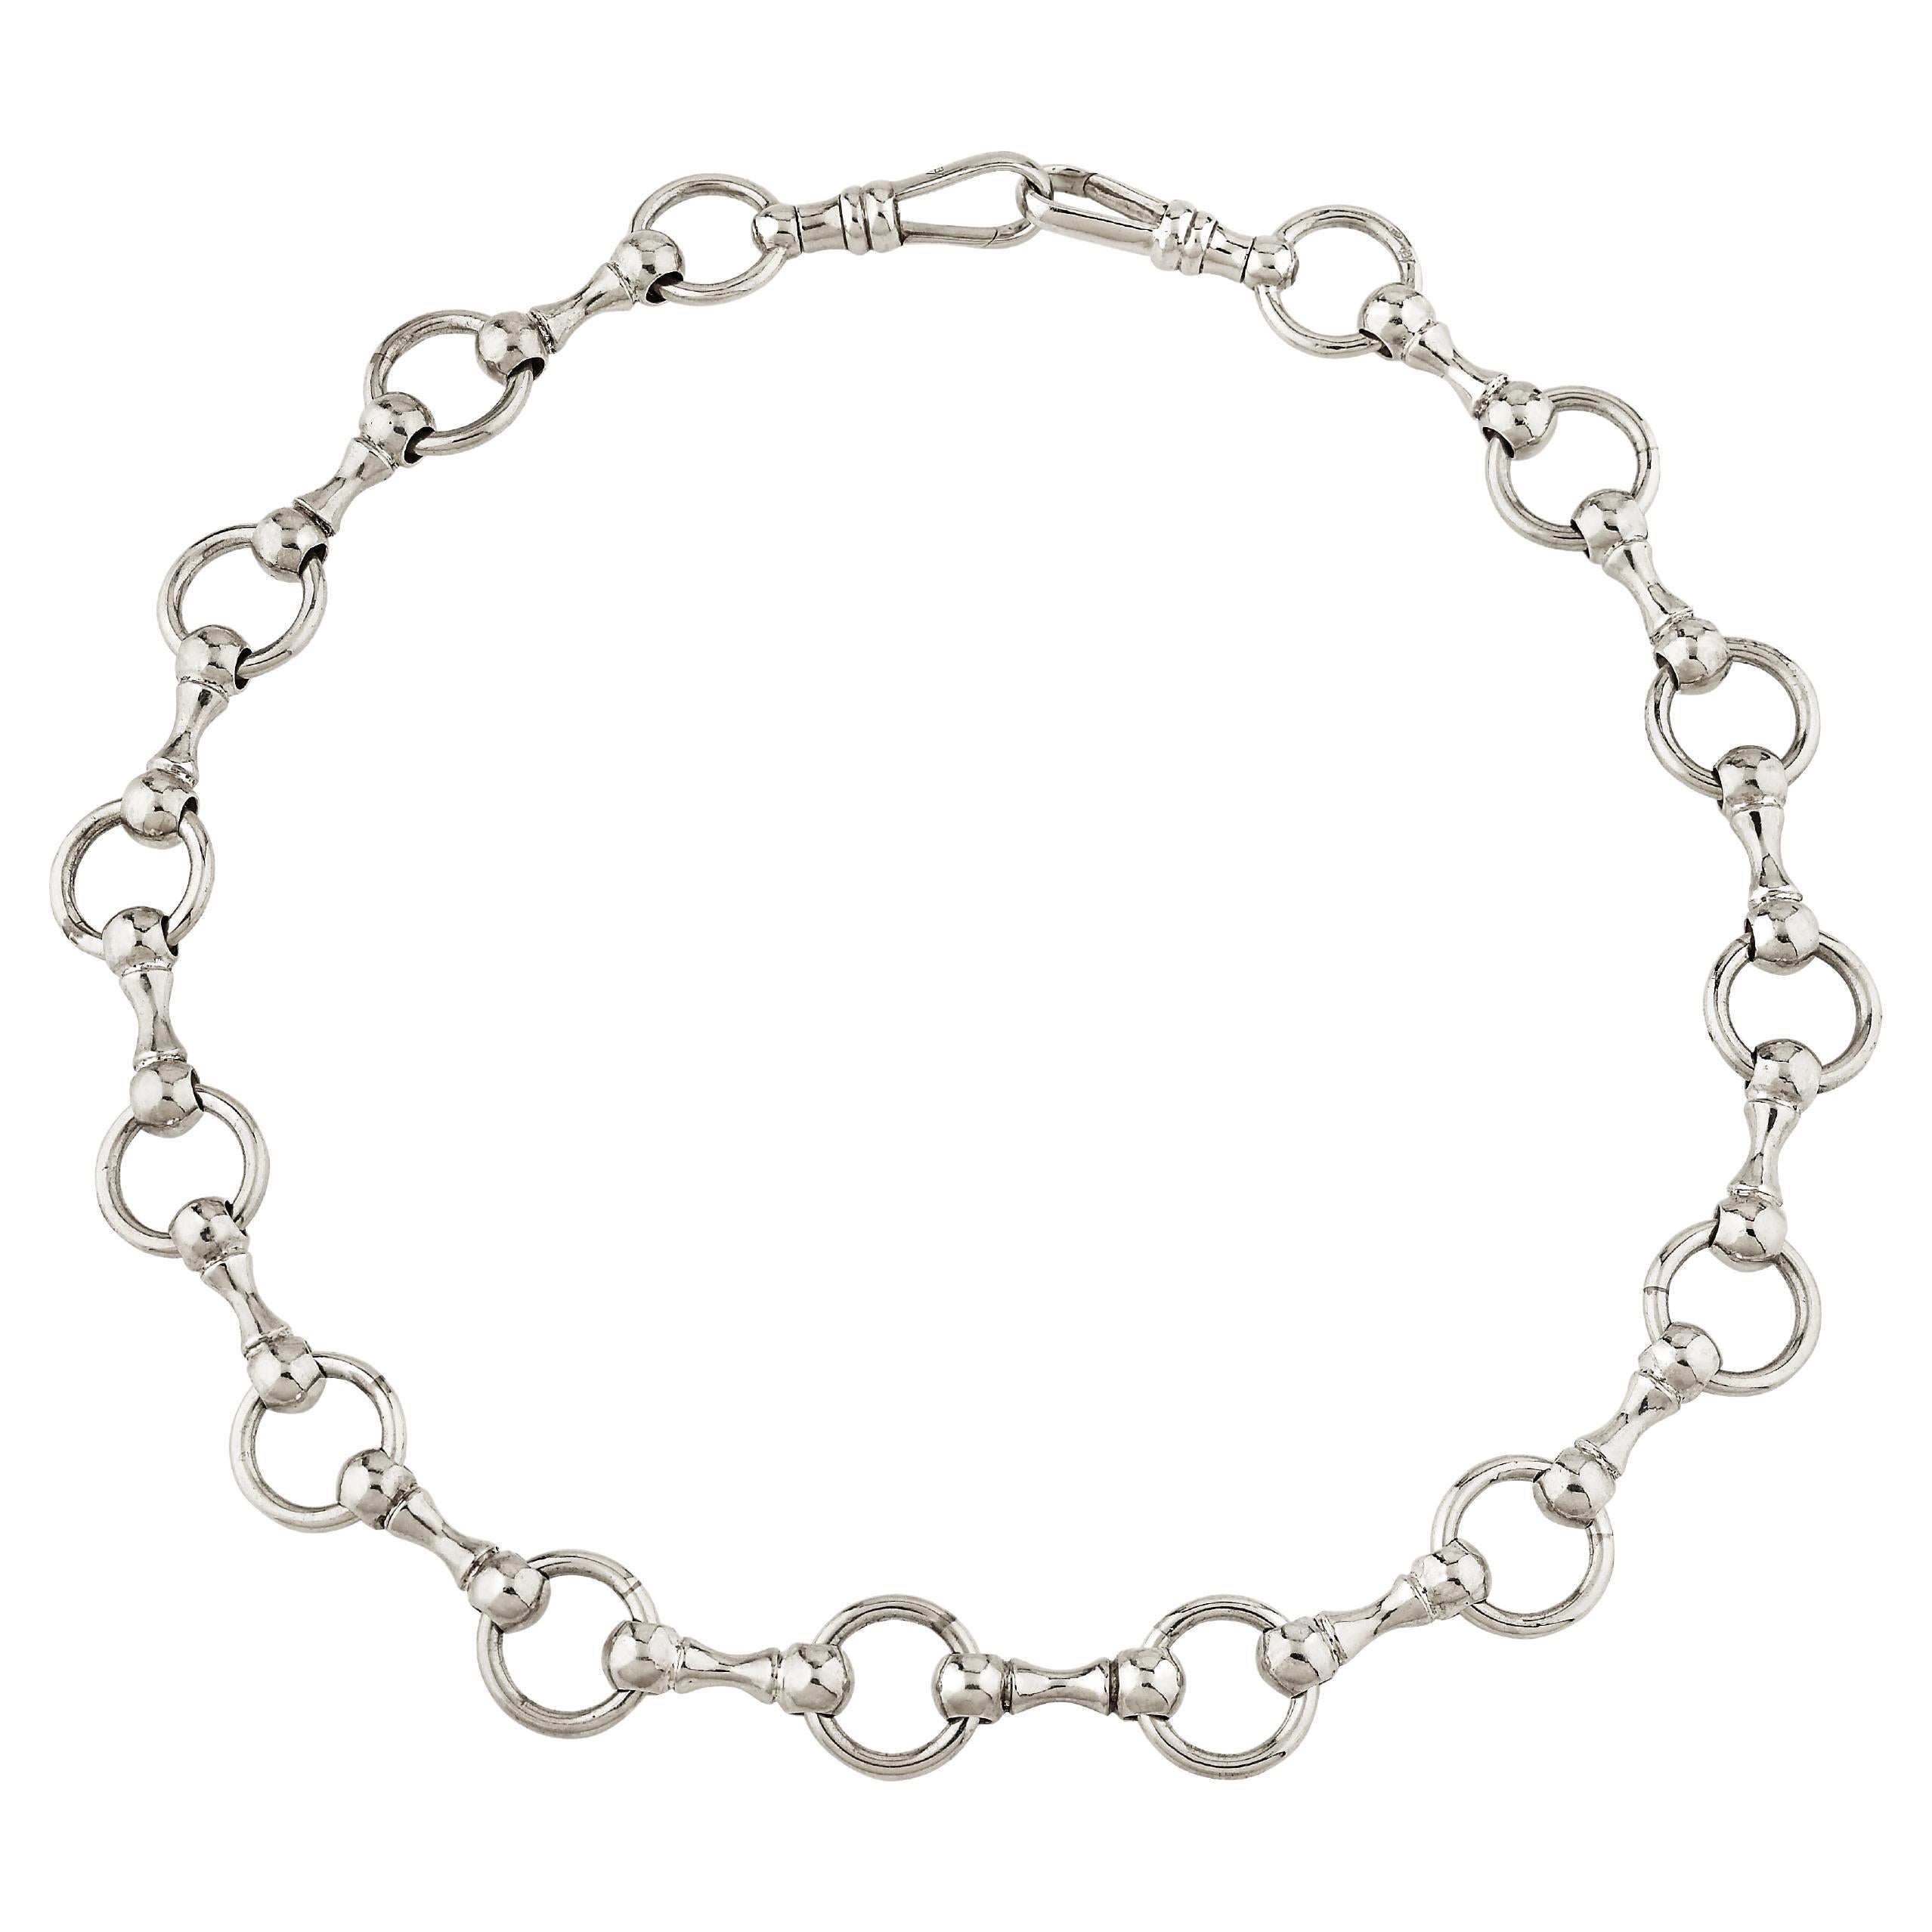 Betony Vernon « O'Ring Signature Chain Collier Large » en argent sterling 925 en stock